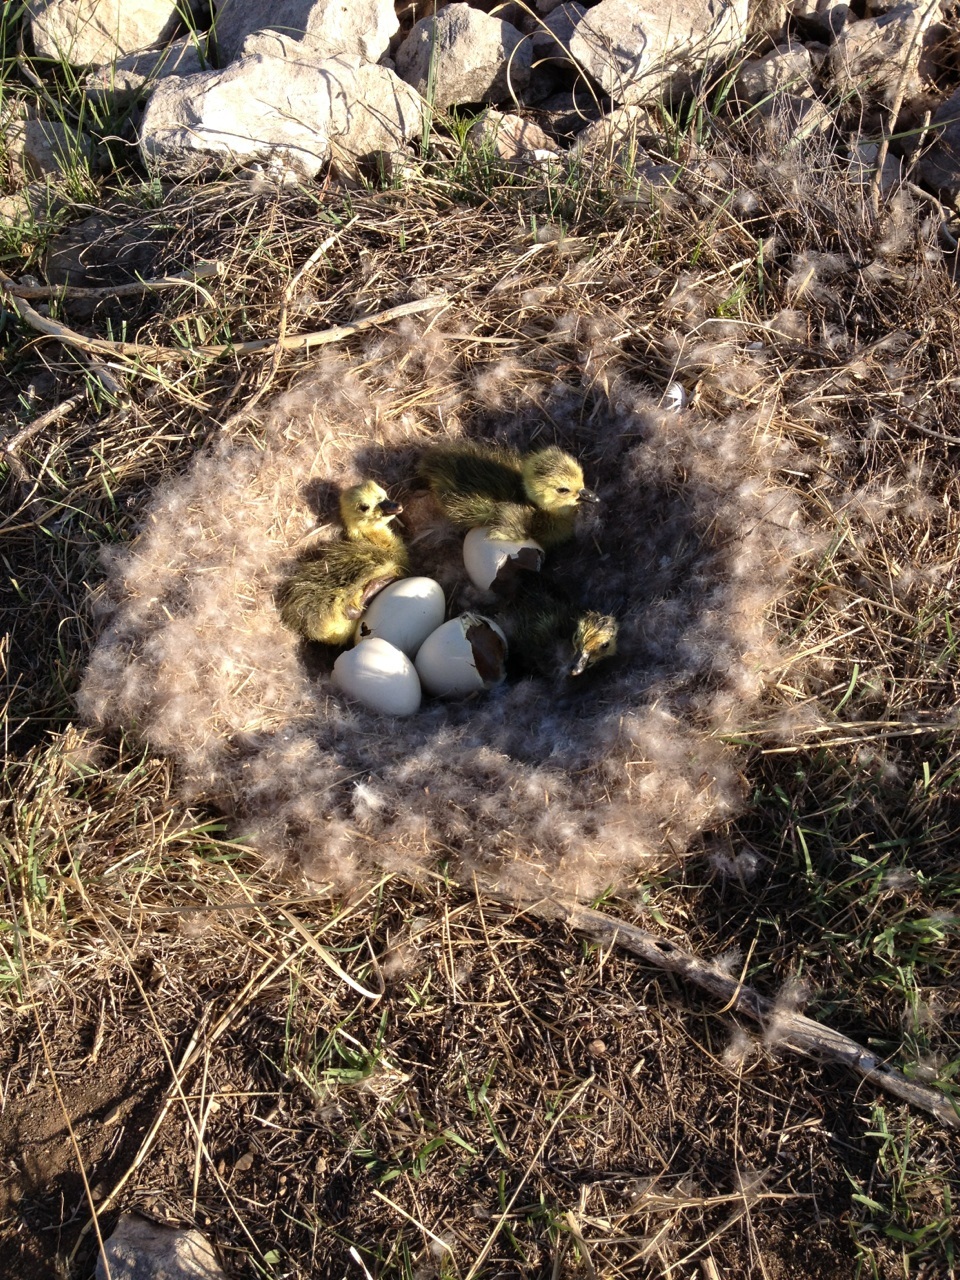 Baby Geese hatching at Amarillo Regulating Reservoir